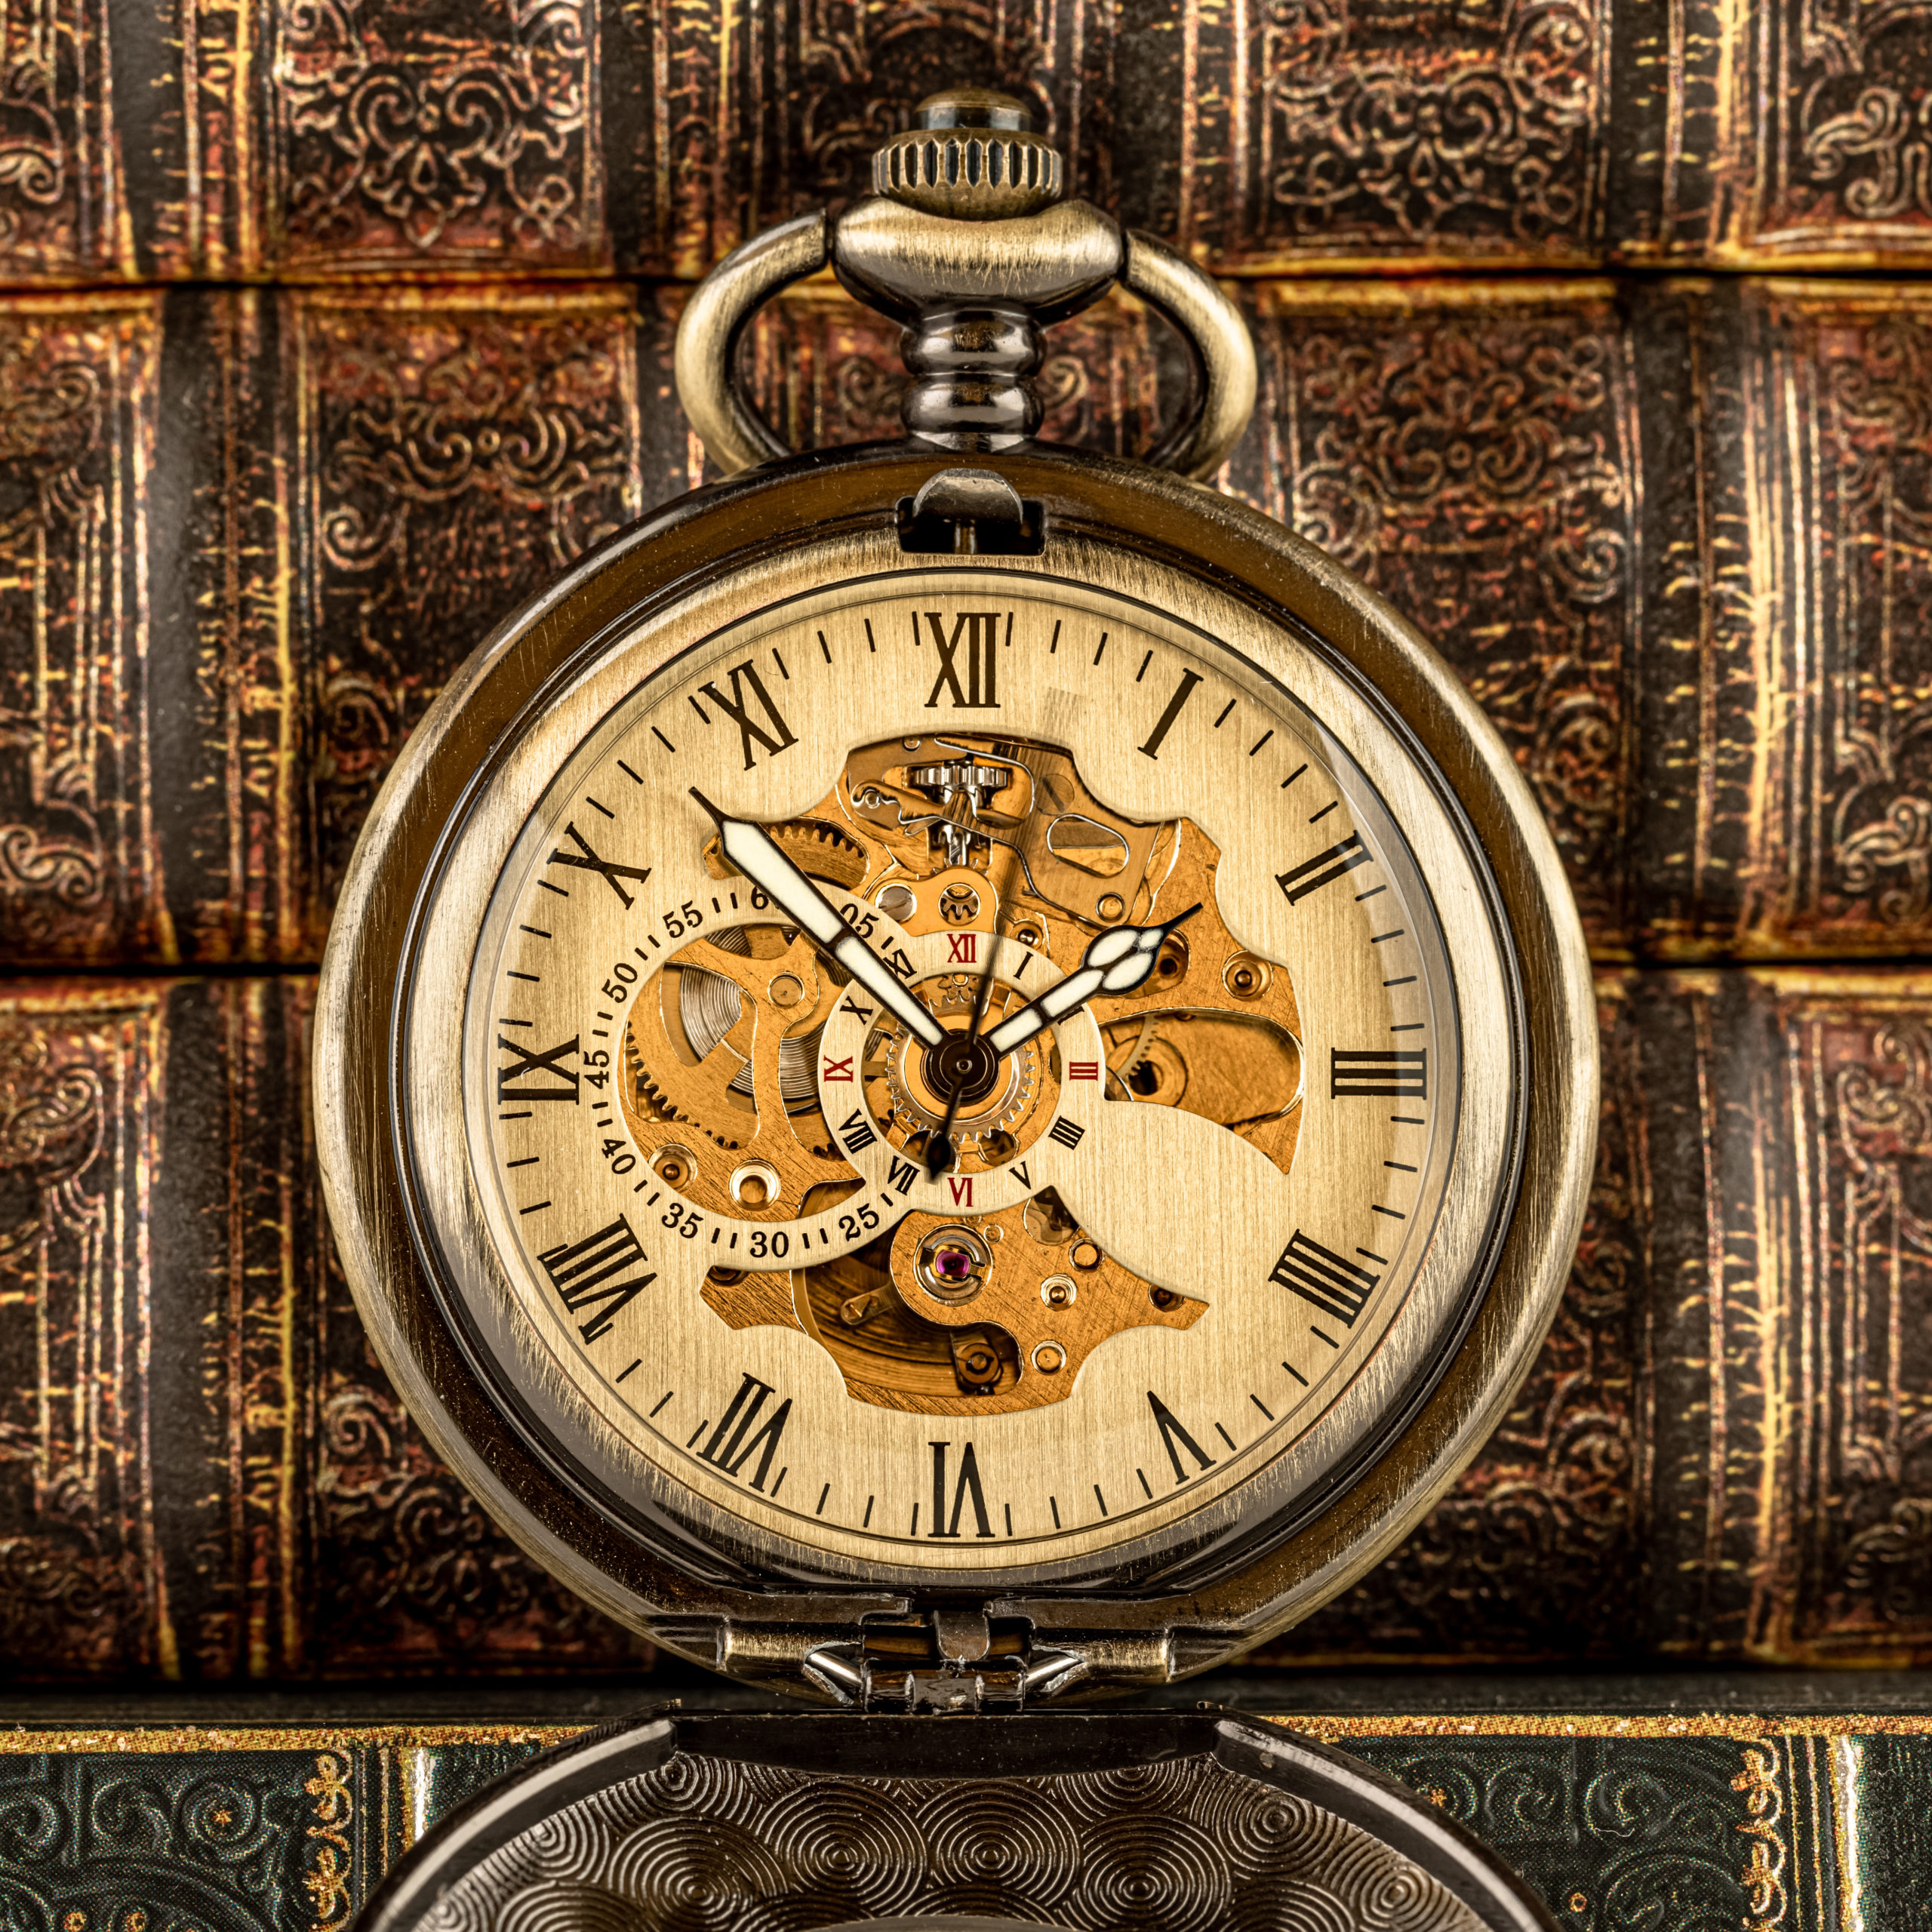 https://partnership.com.de/wp-content/uploads/2023/03/antique-clock-dial-close-up-vintage-pocket-watch-2021-08-30-19-01-24-utc-scaled.jpg